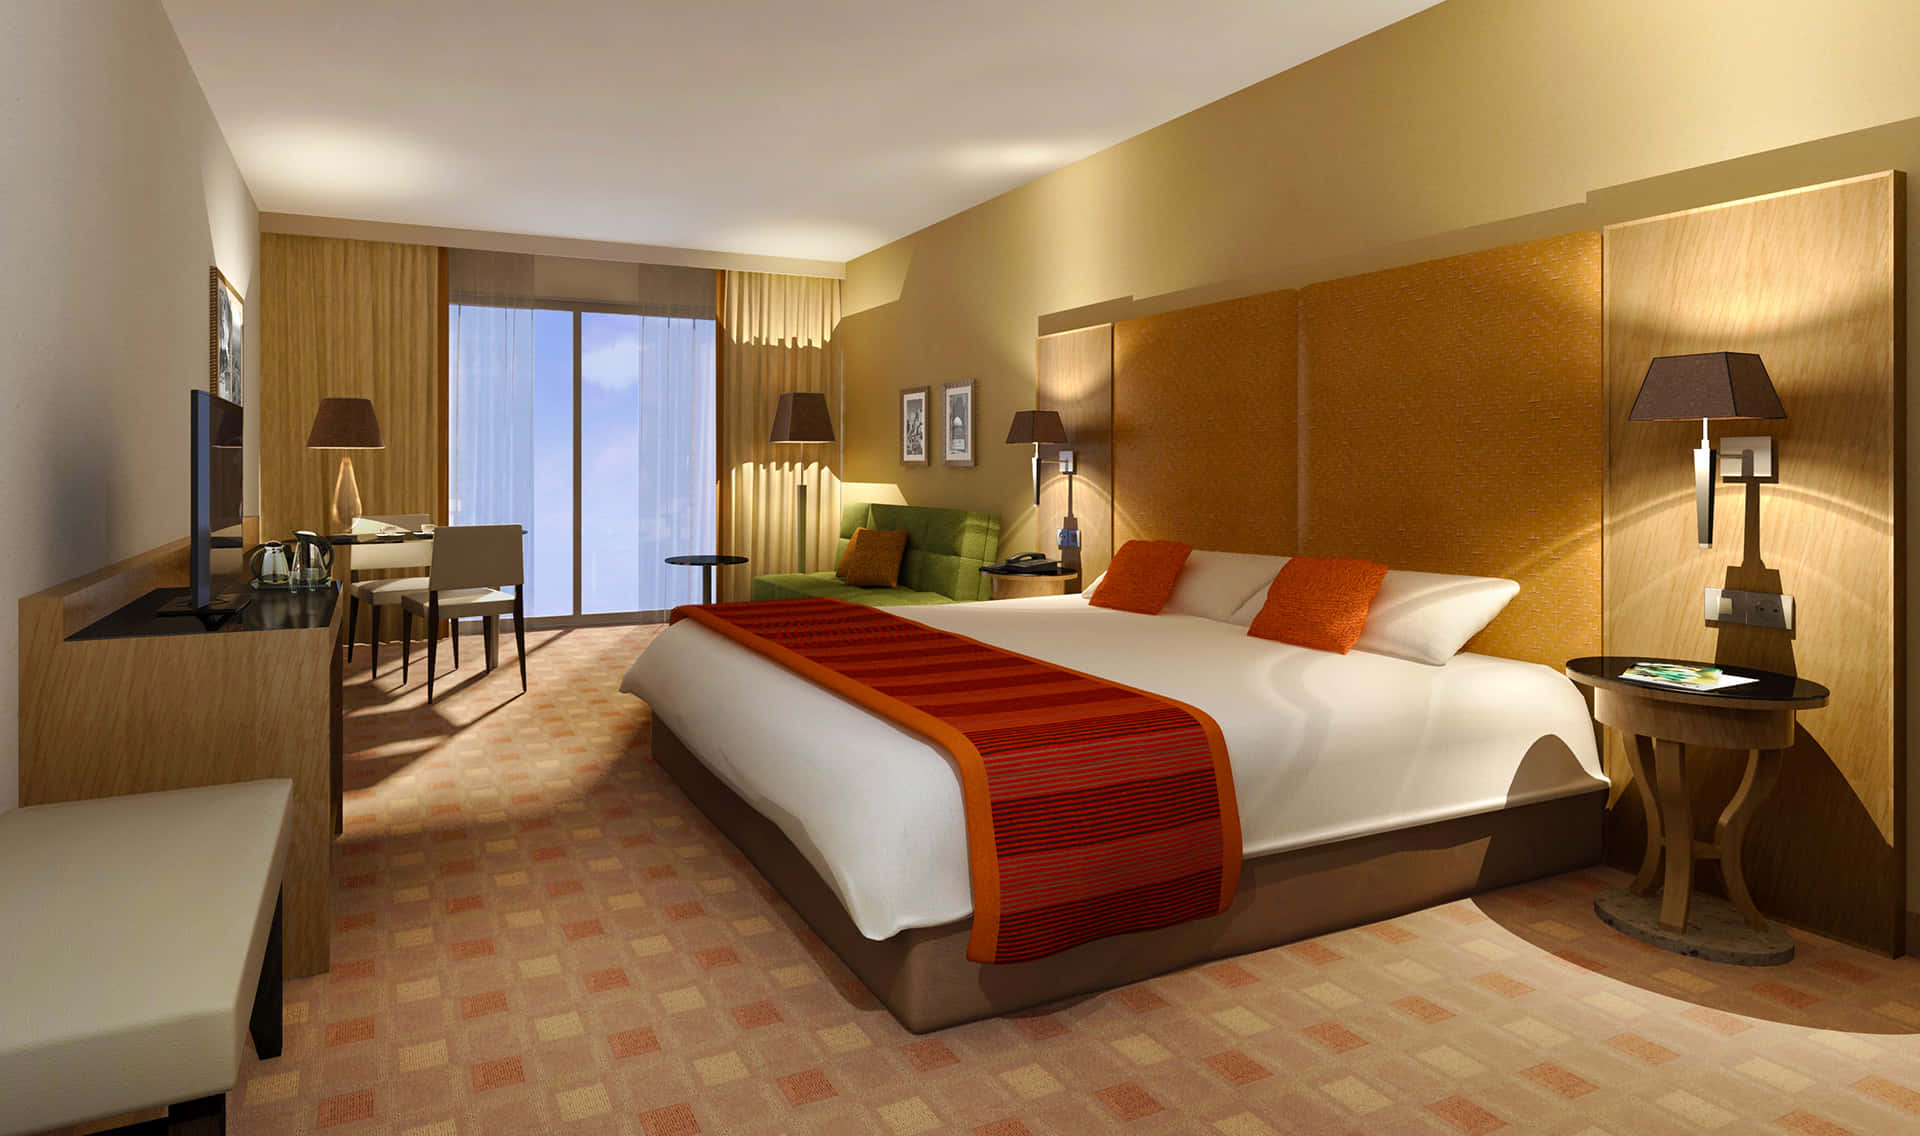 Upscale and Elegant Hotel Room Design